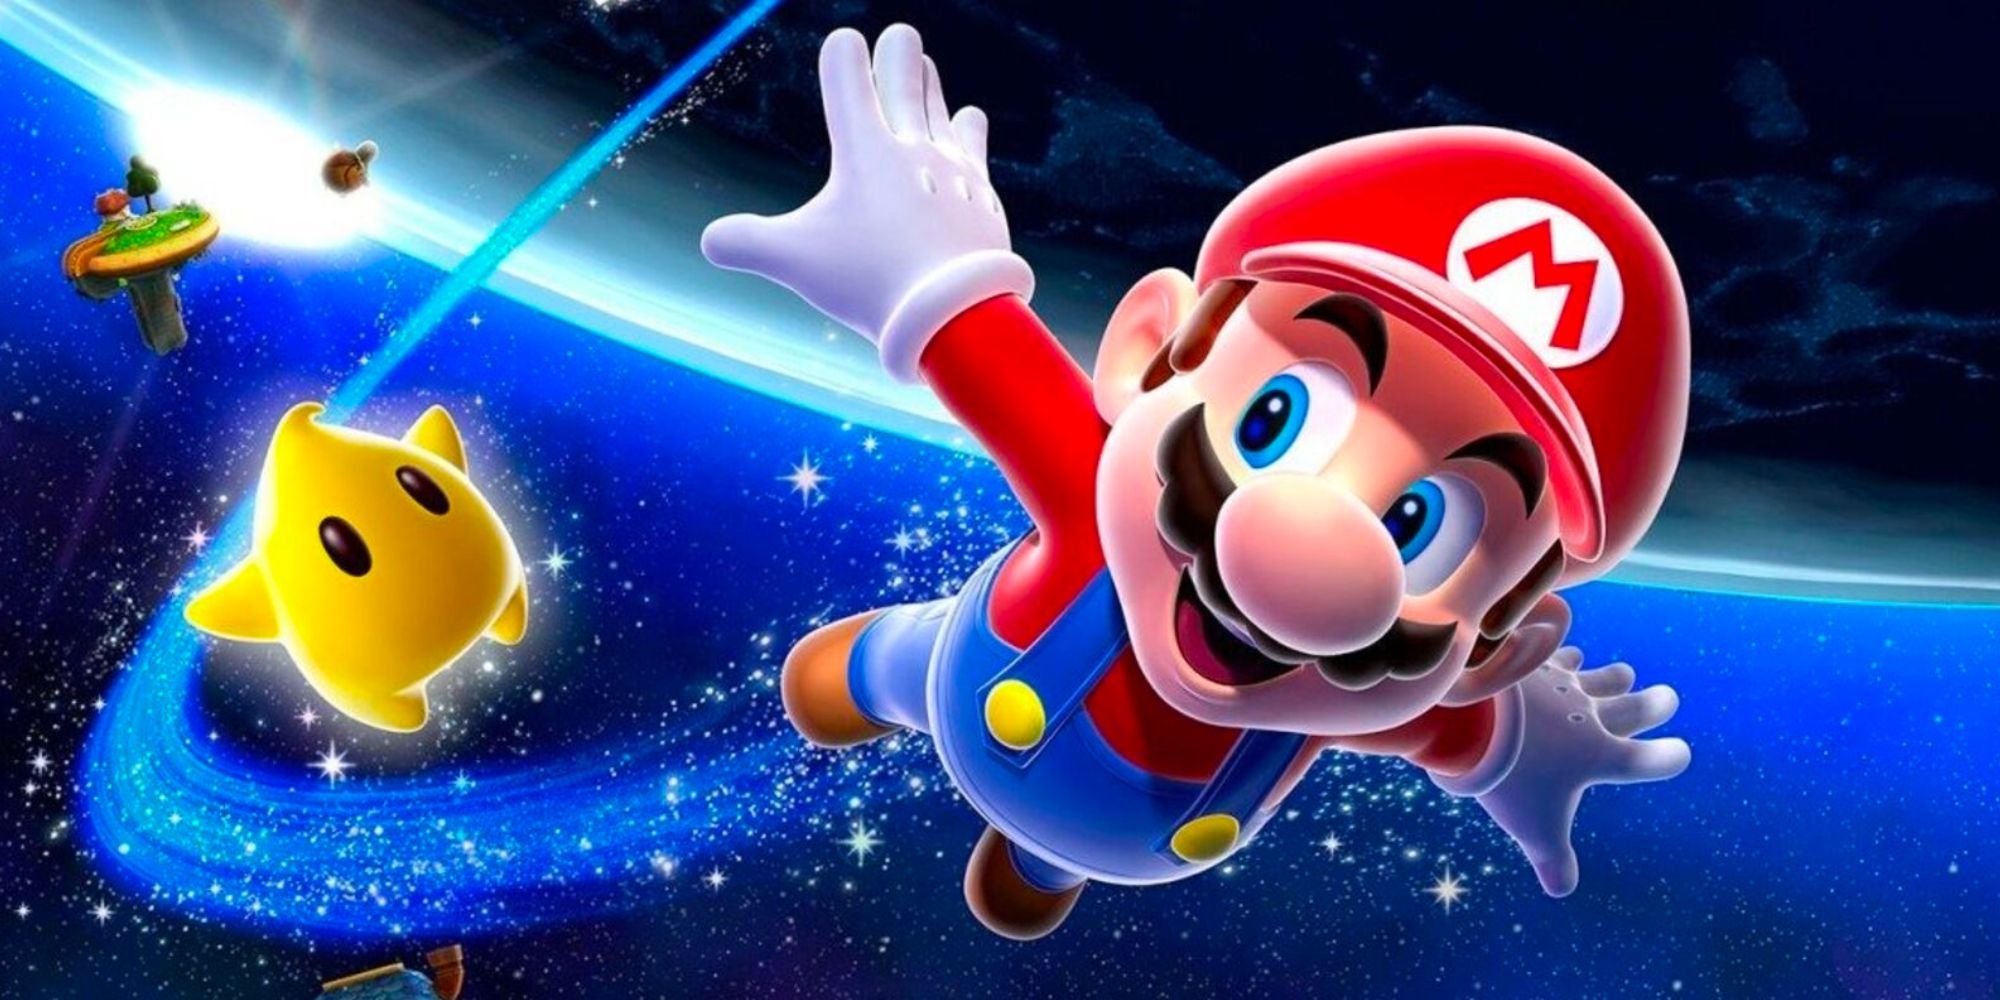 Mario flying